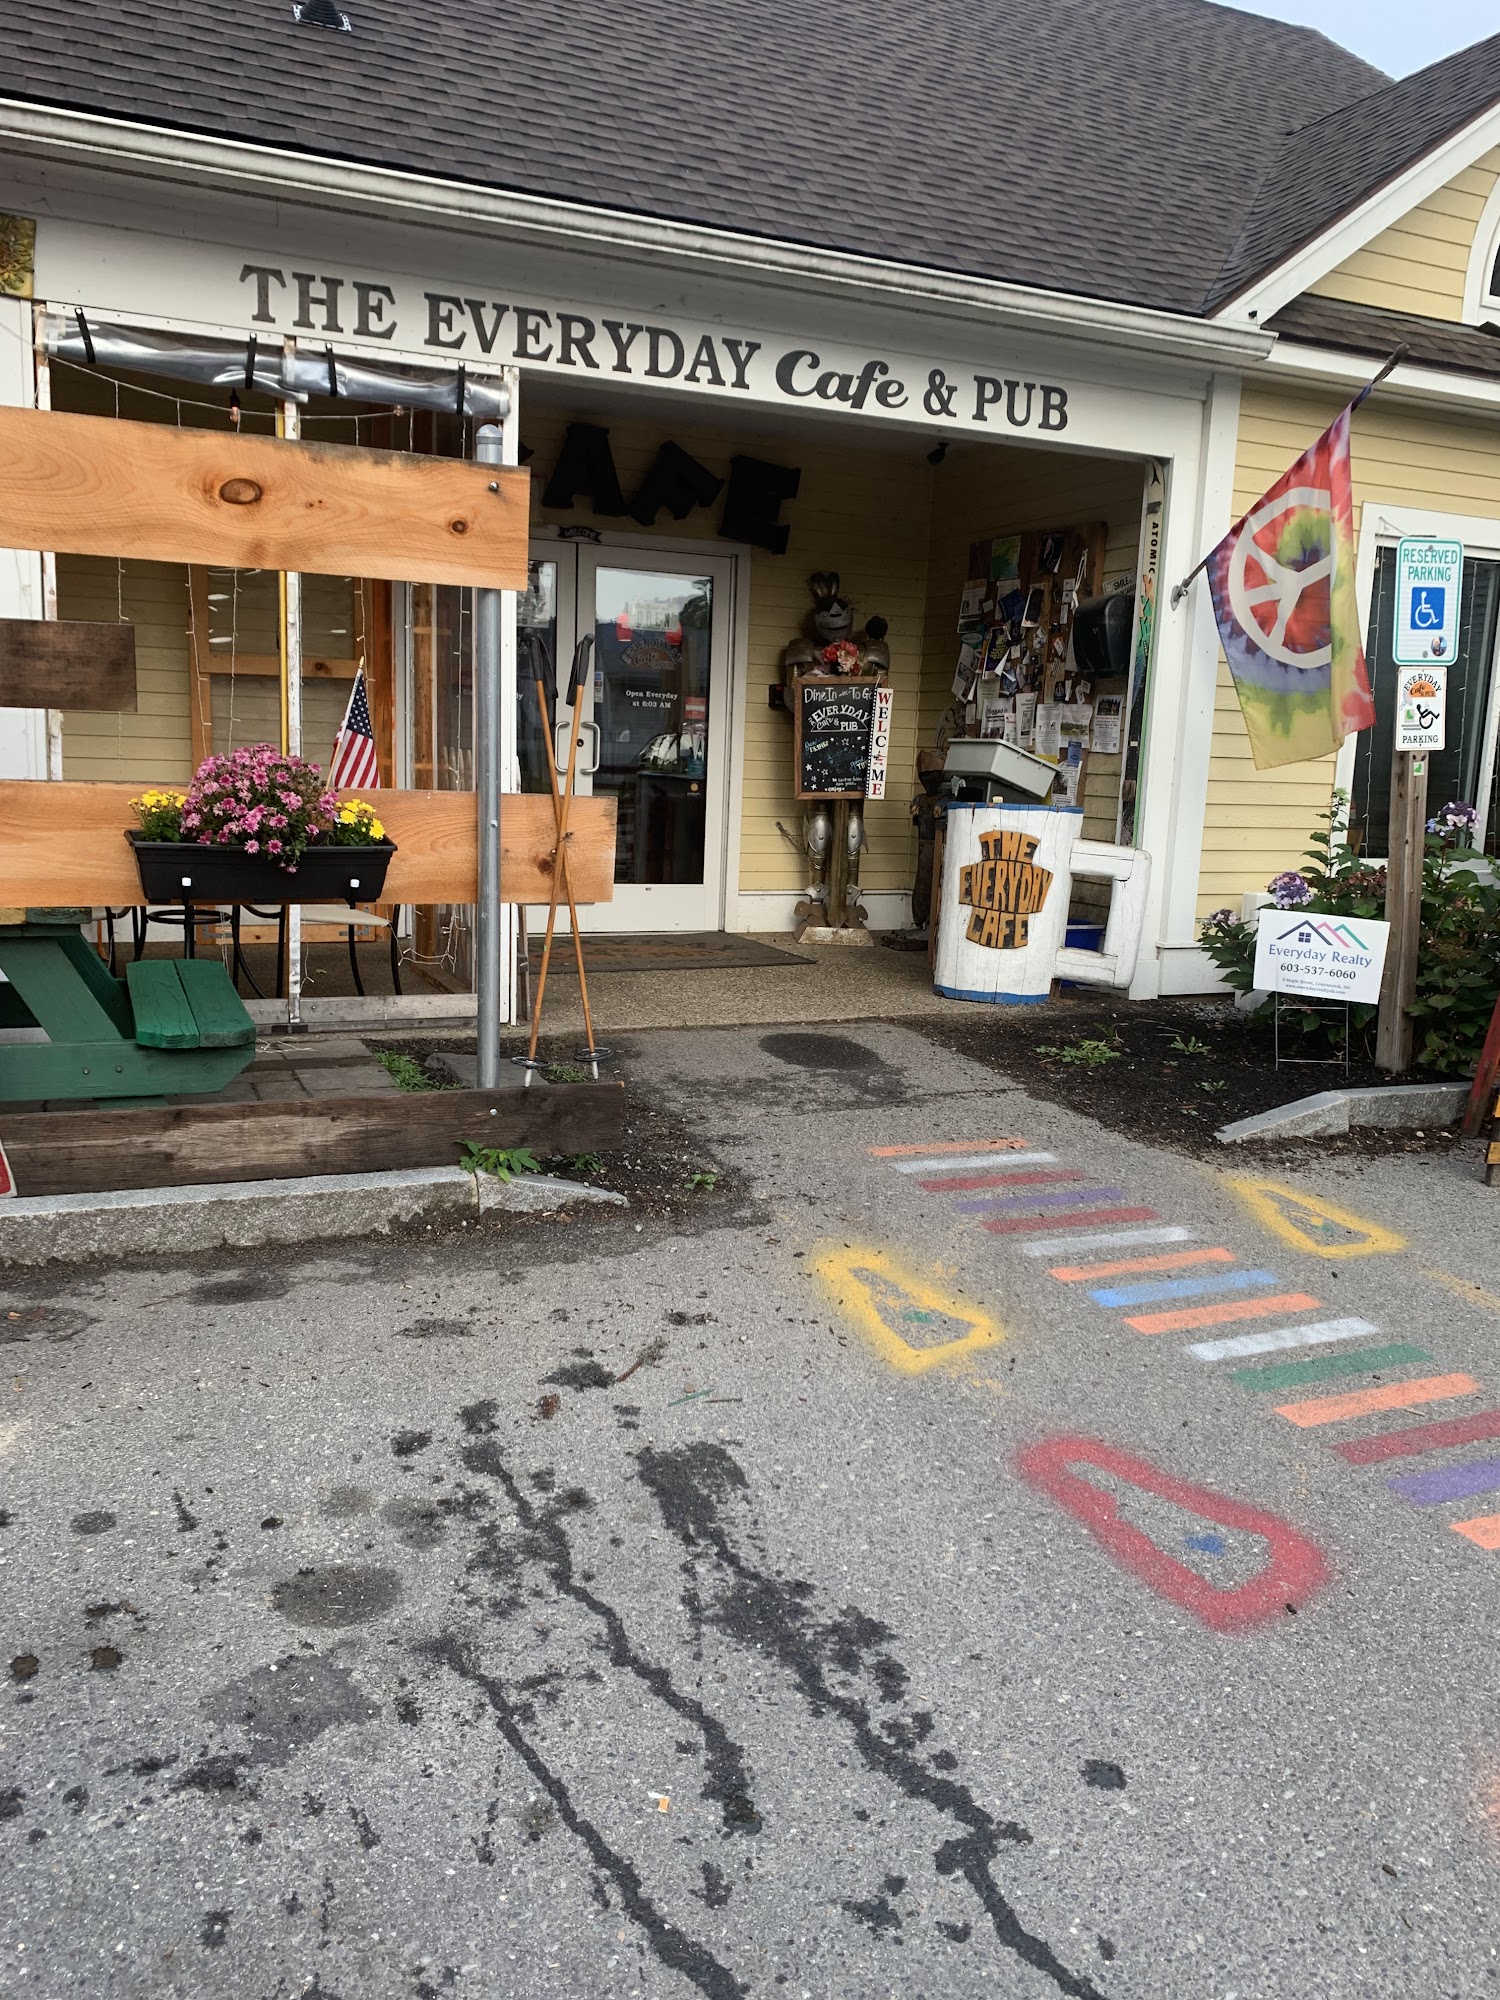 The Everyday Cafe & Pub